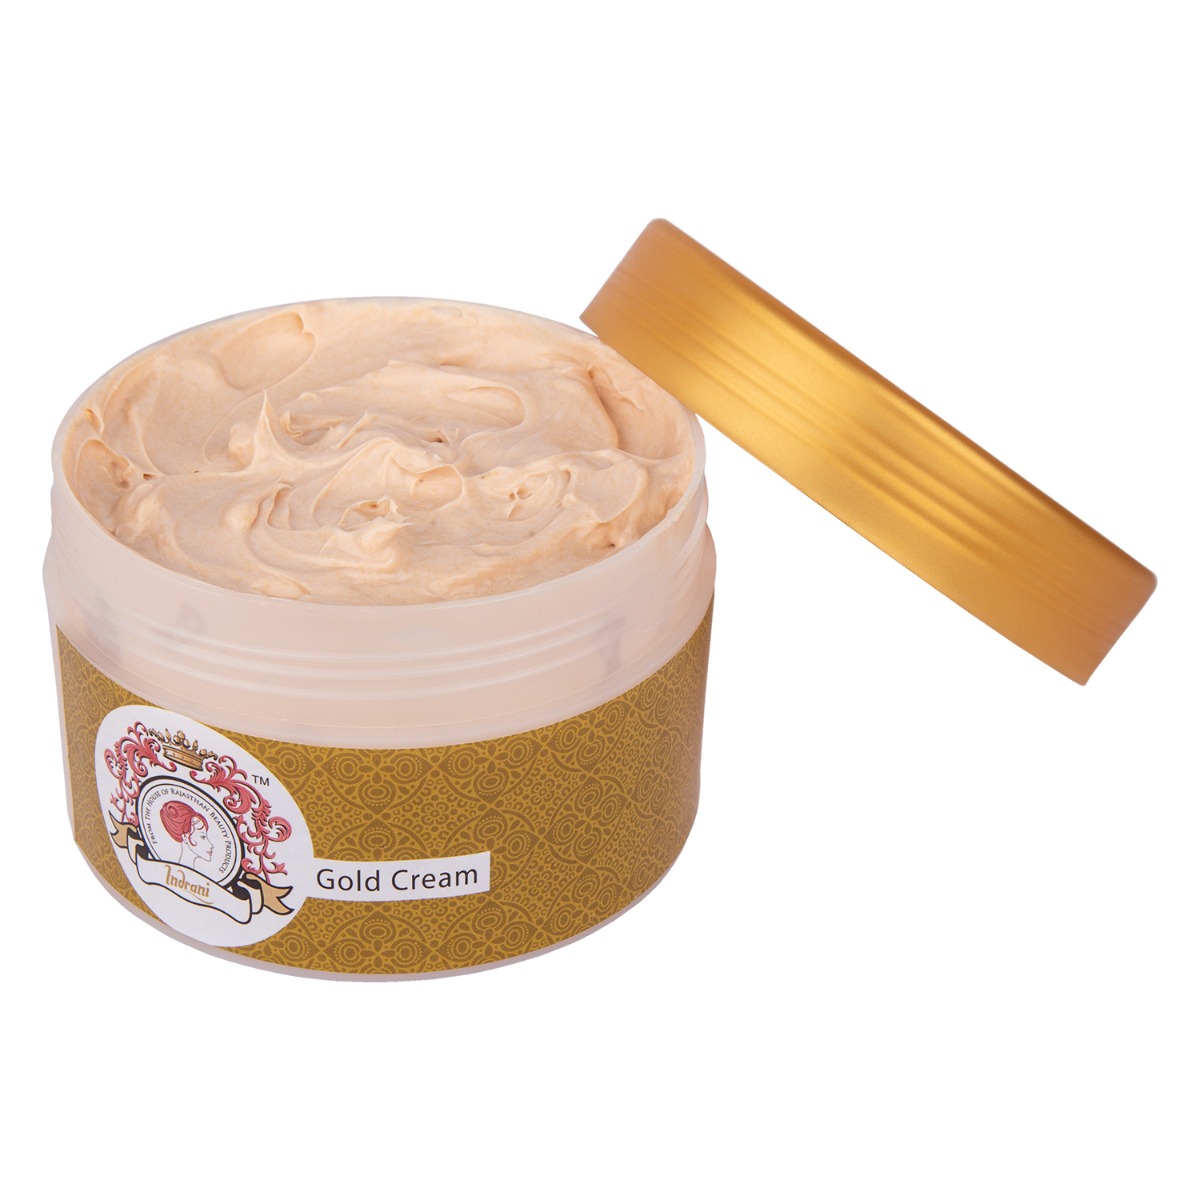 Indrani Gold Cream, 300gm